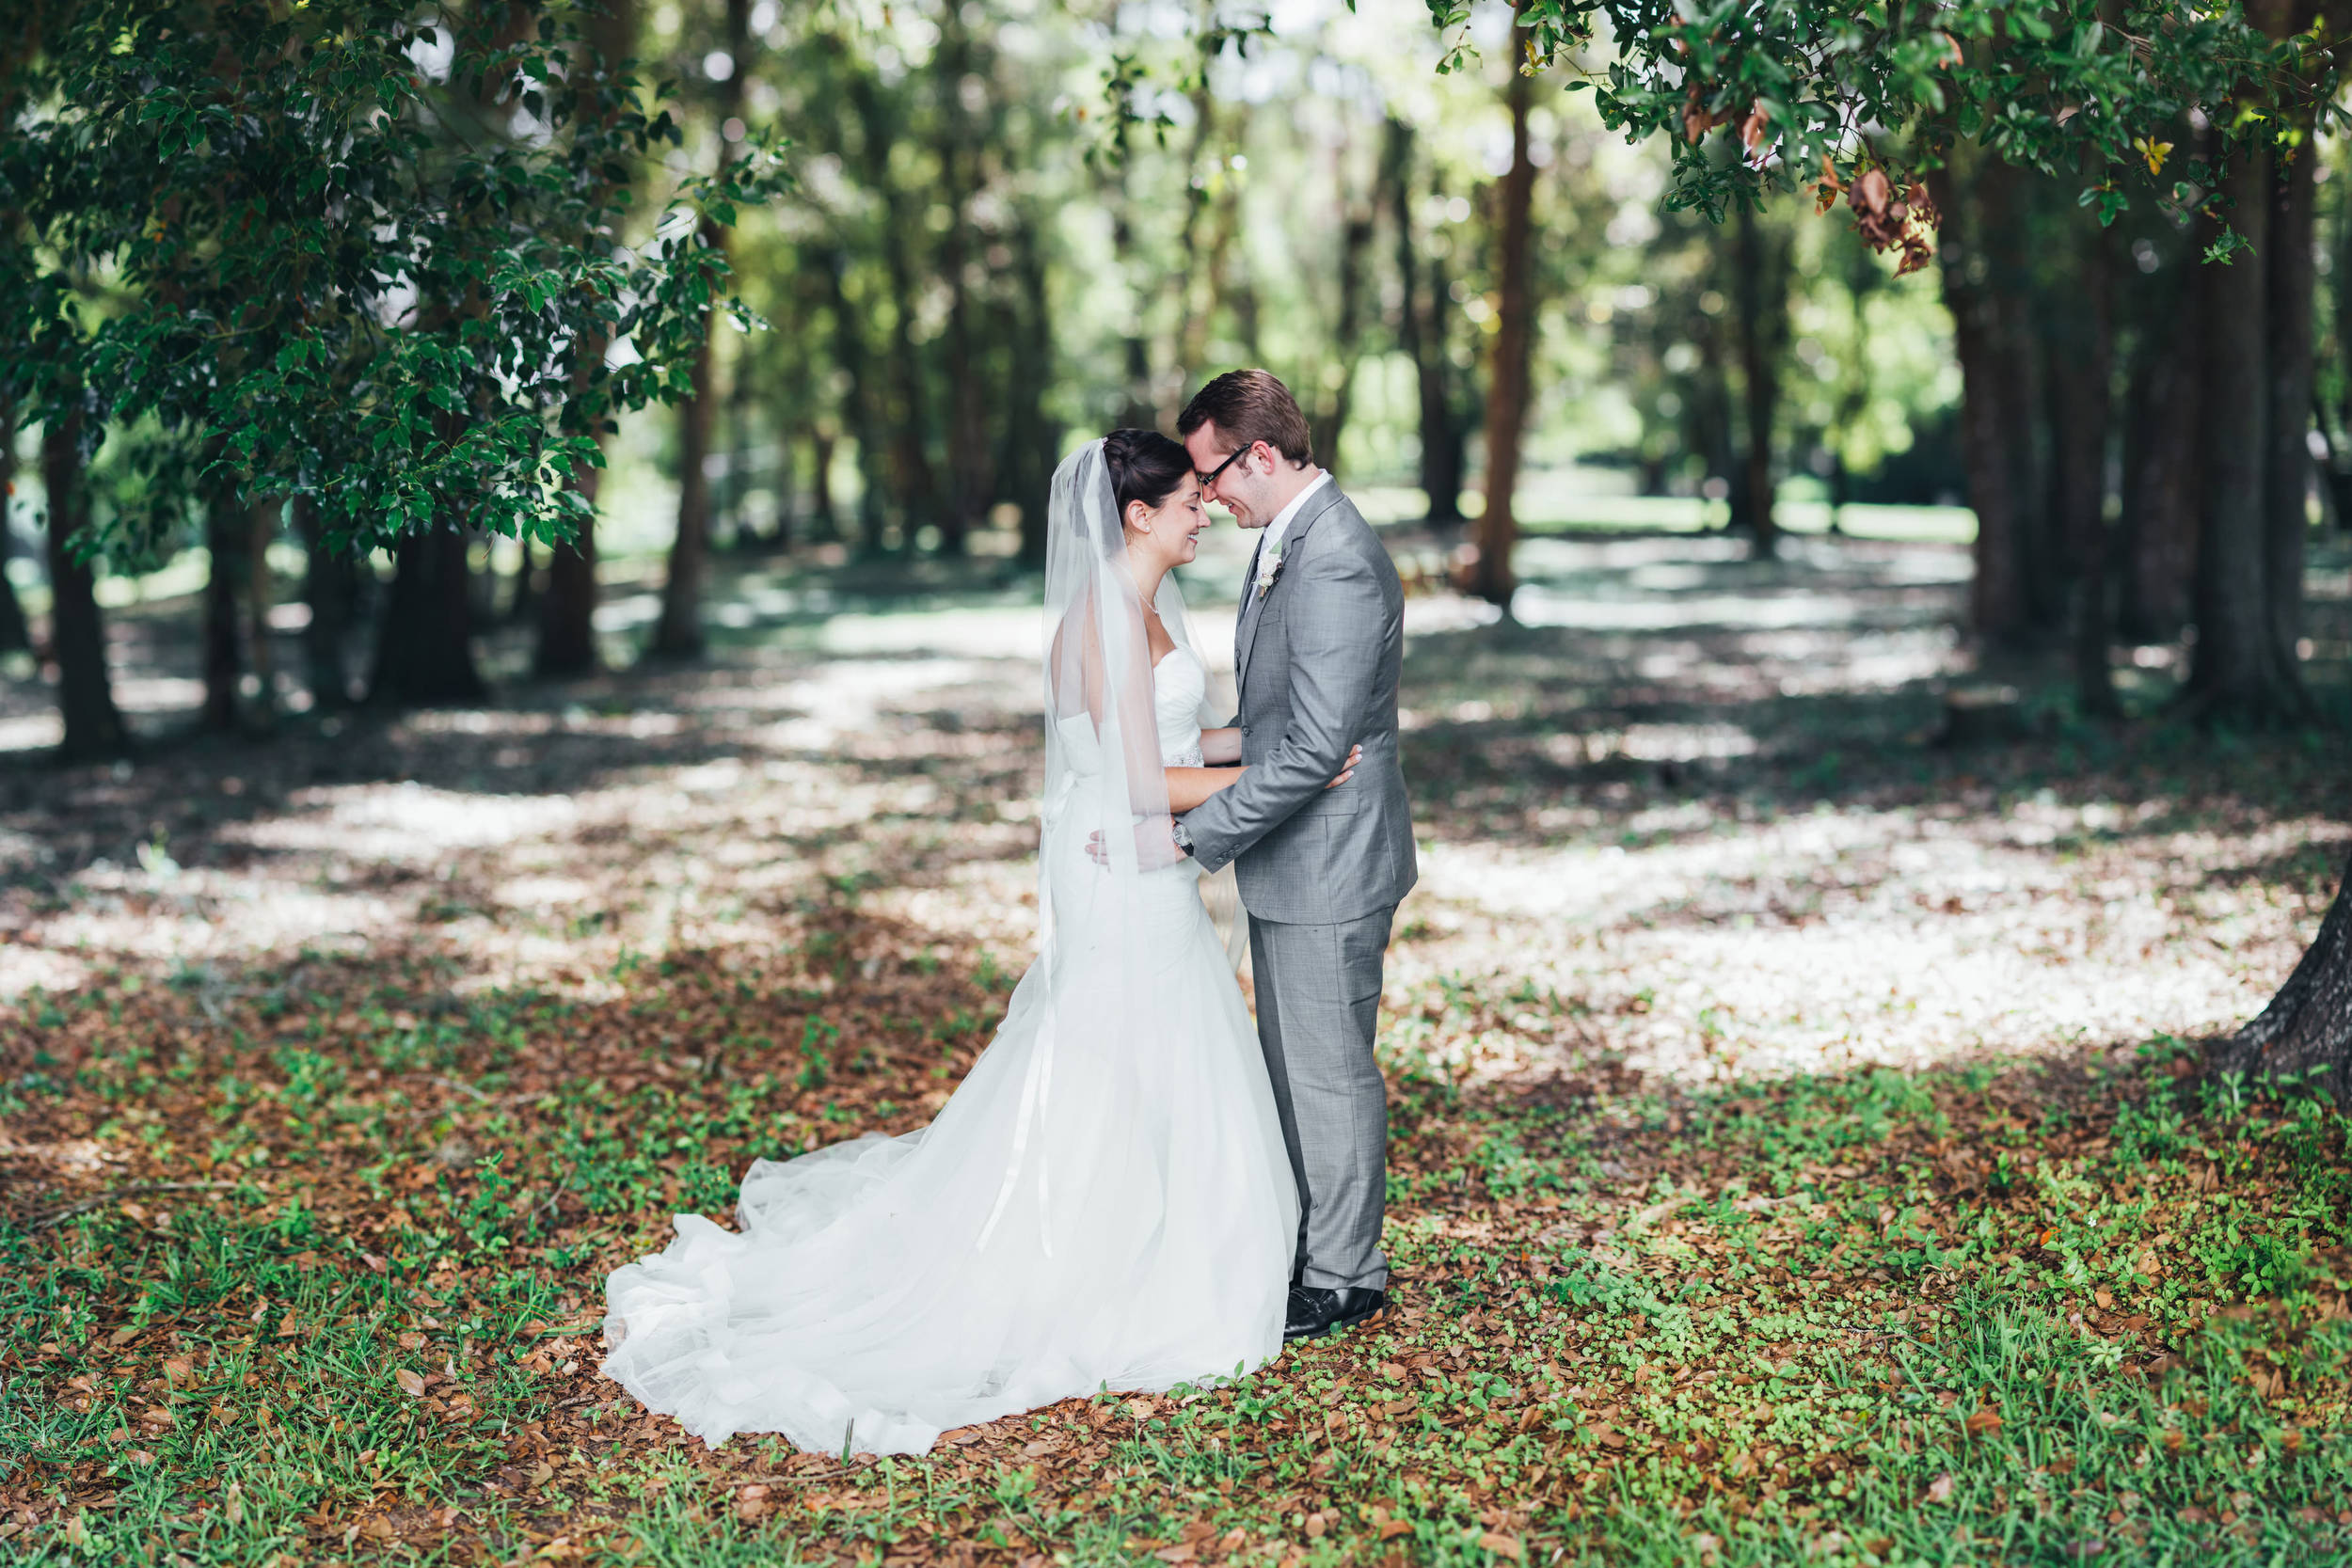 Shannon & Robert | Wedding | Highland Manor - Apopka, Florida | Benjamin Hewitt Photography